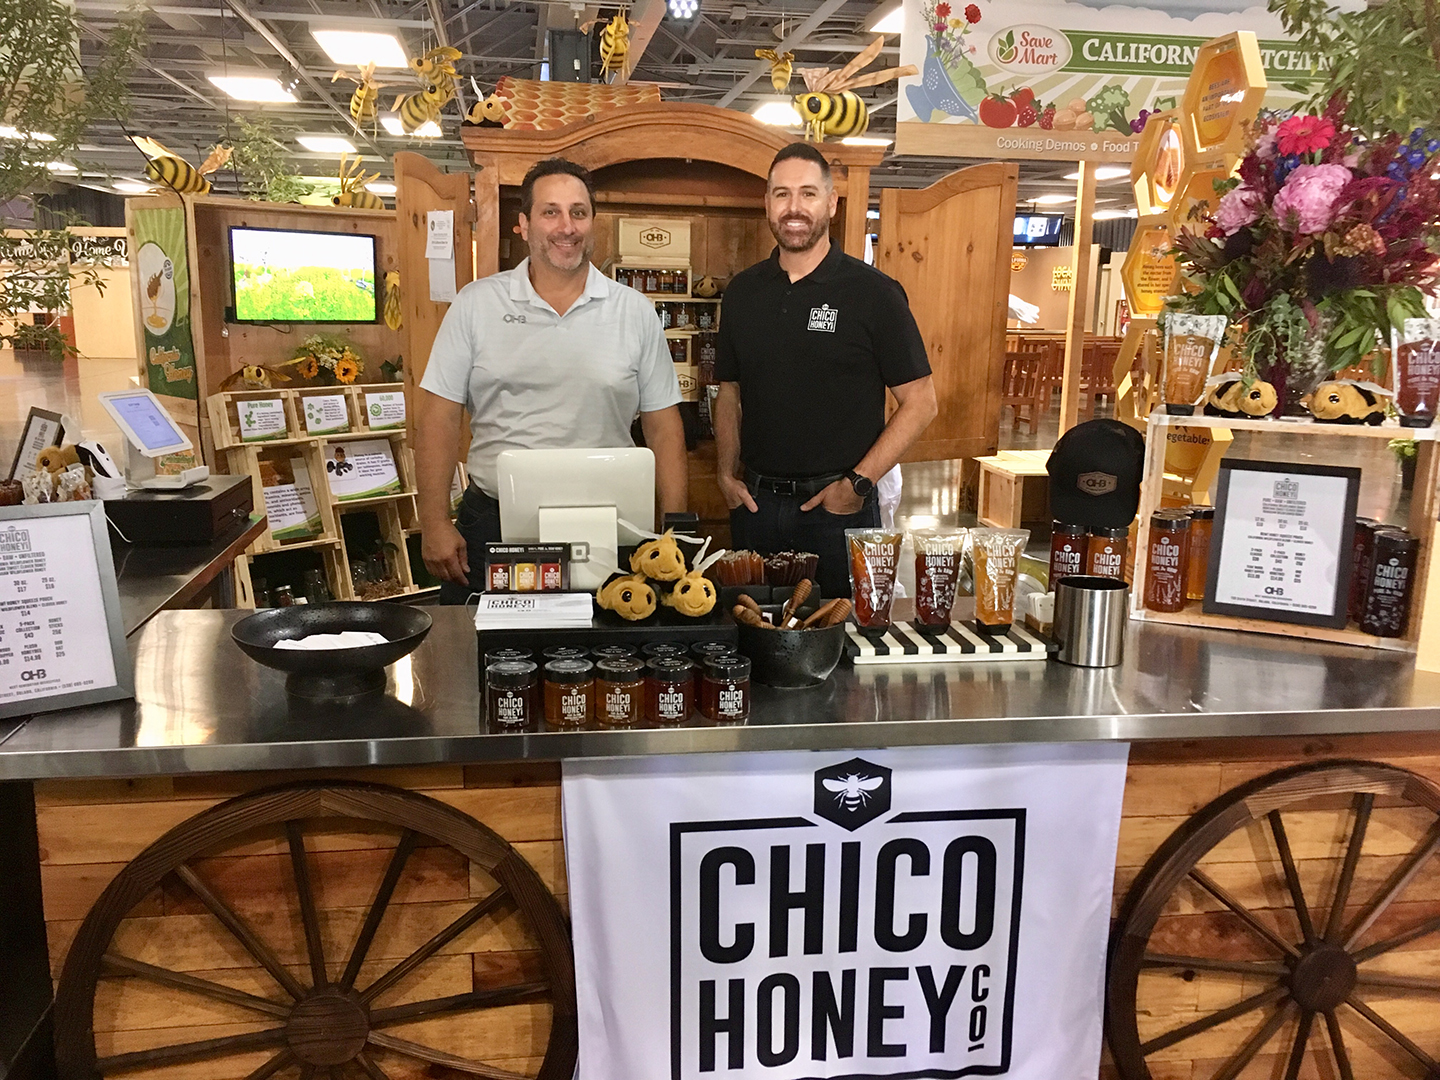 CA Honey Sampling & Sales Booth, Chico Honey Co.